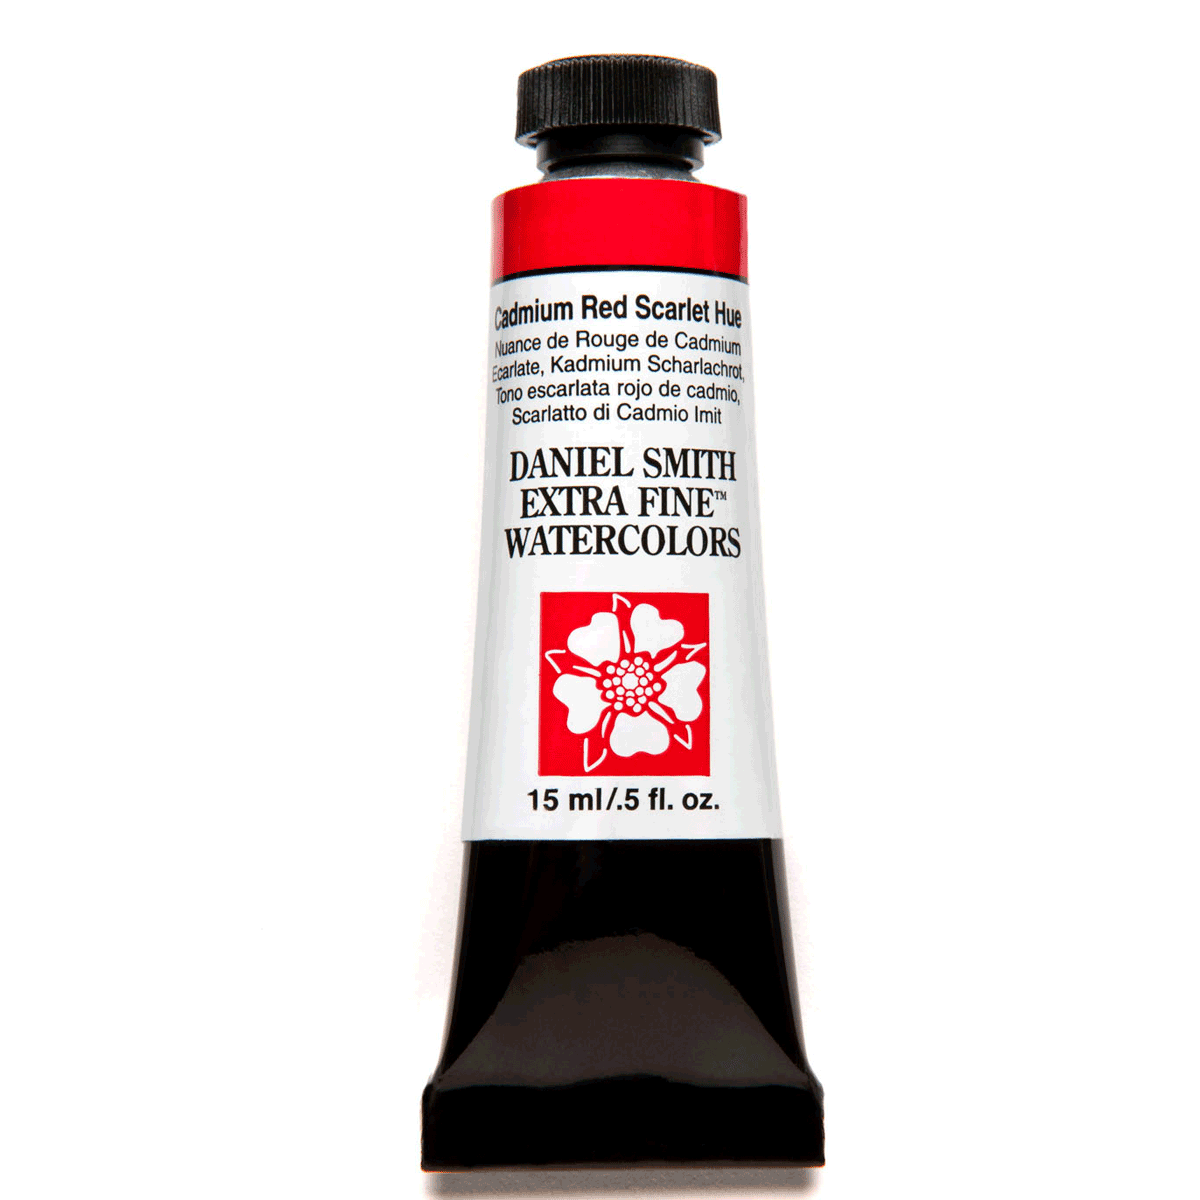 Daniel Smith Extra Fine Watercolour Cadmium Red Scarlet Hue 15ml